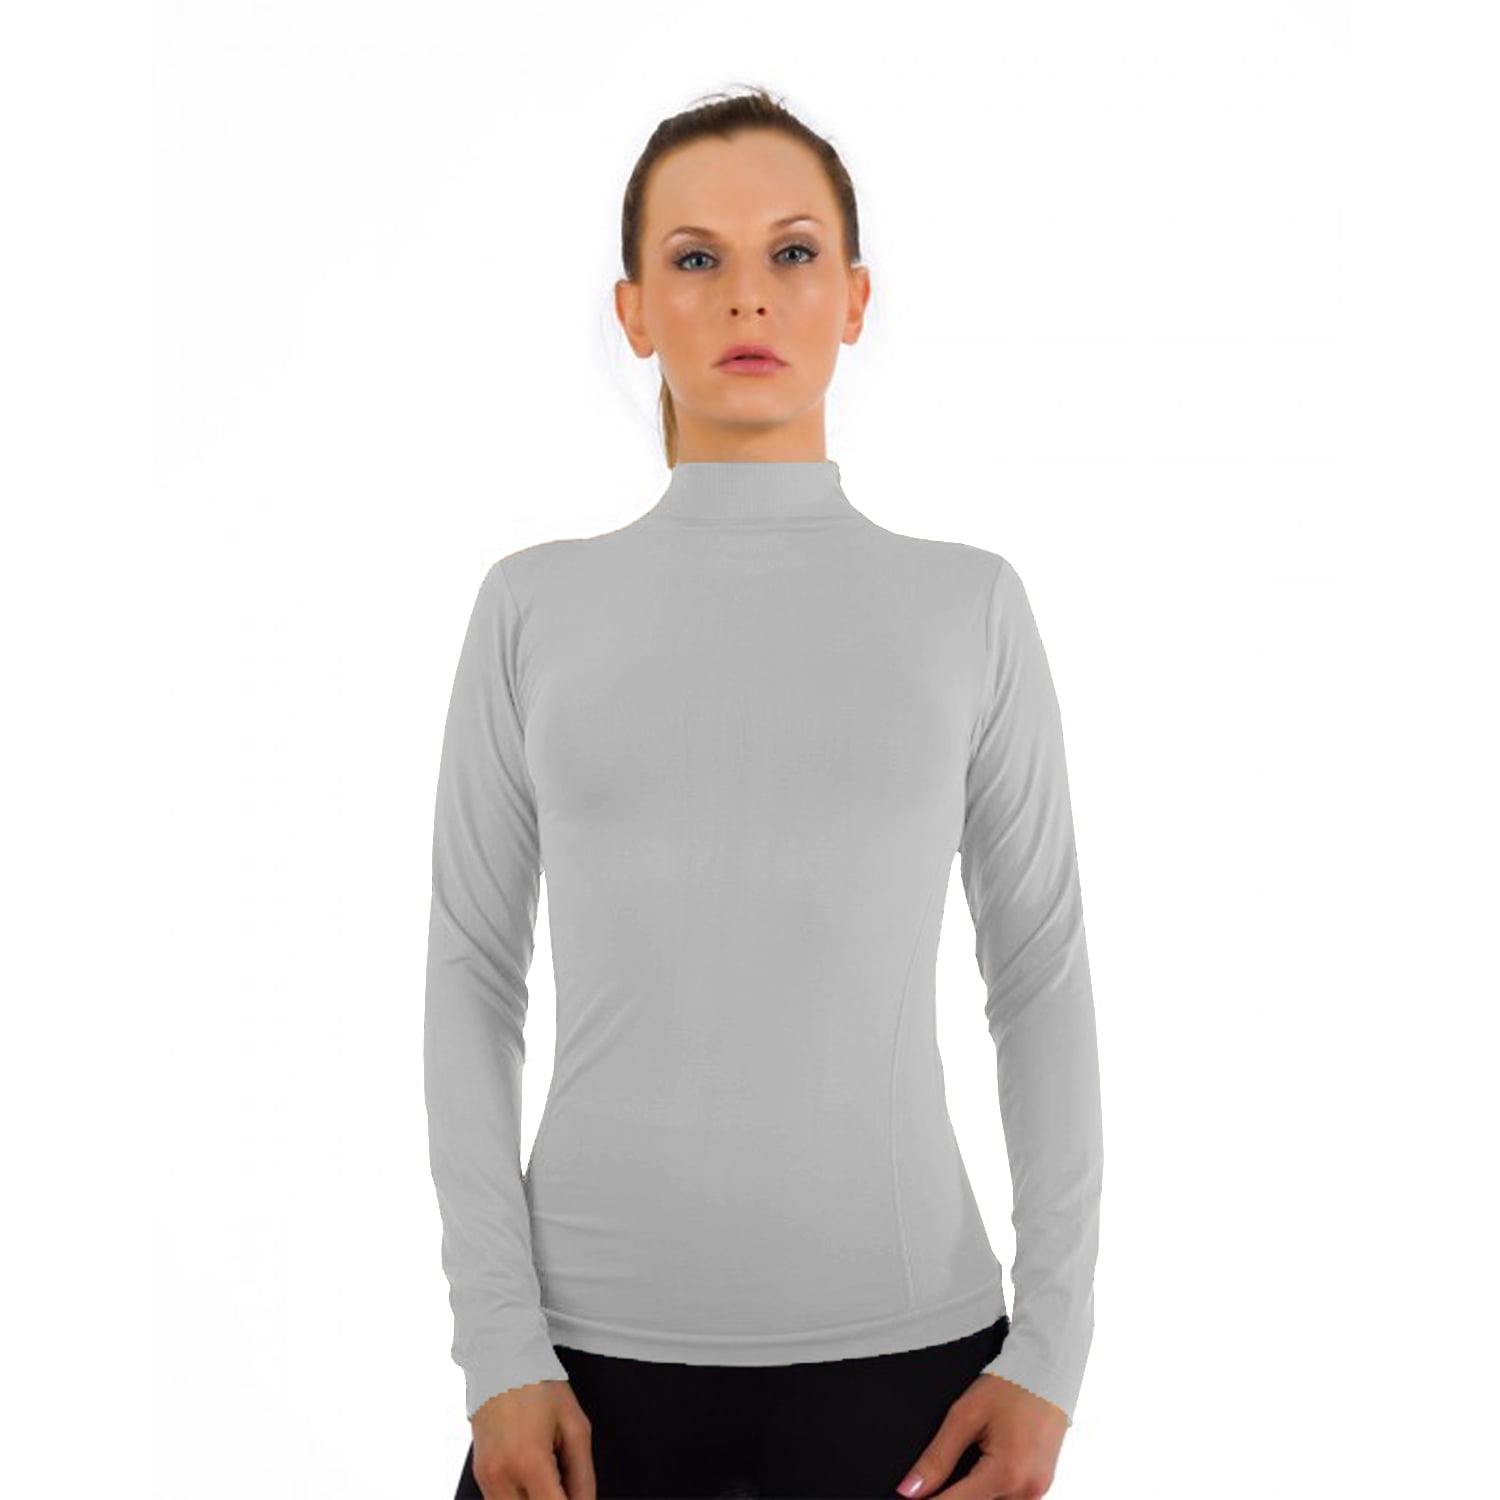 Yesfashion Womens Long Sleeve Sleeveless Turtleneck Lightweight Slim Active Shirt 